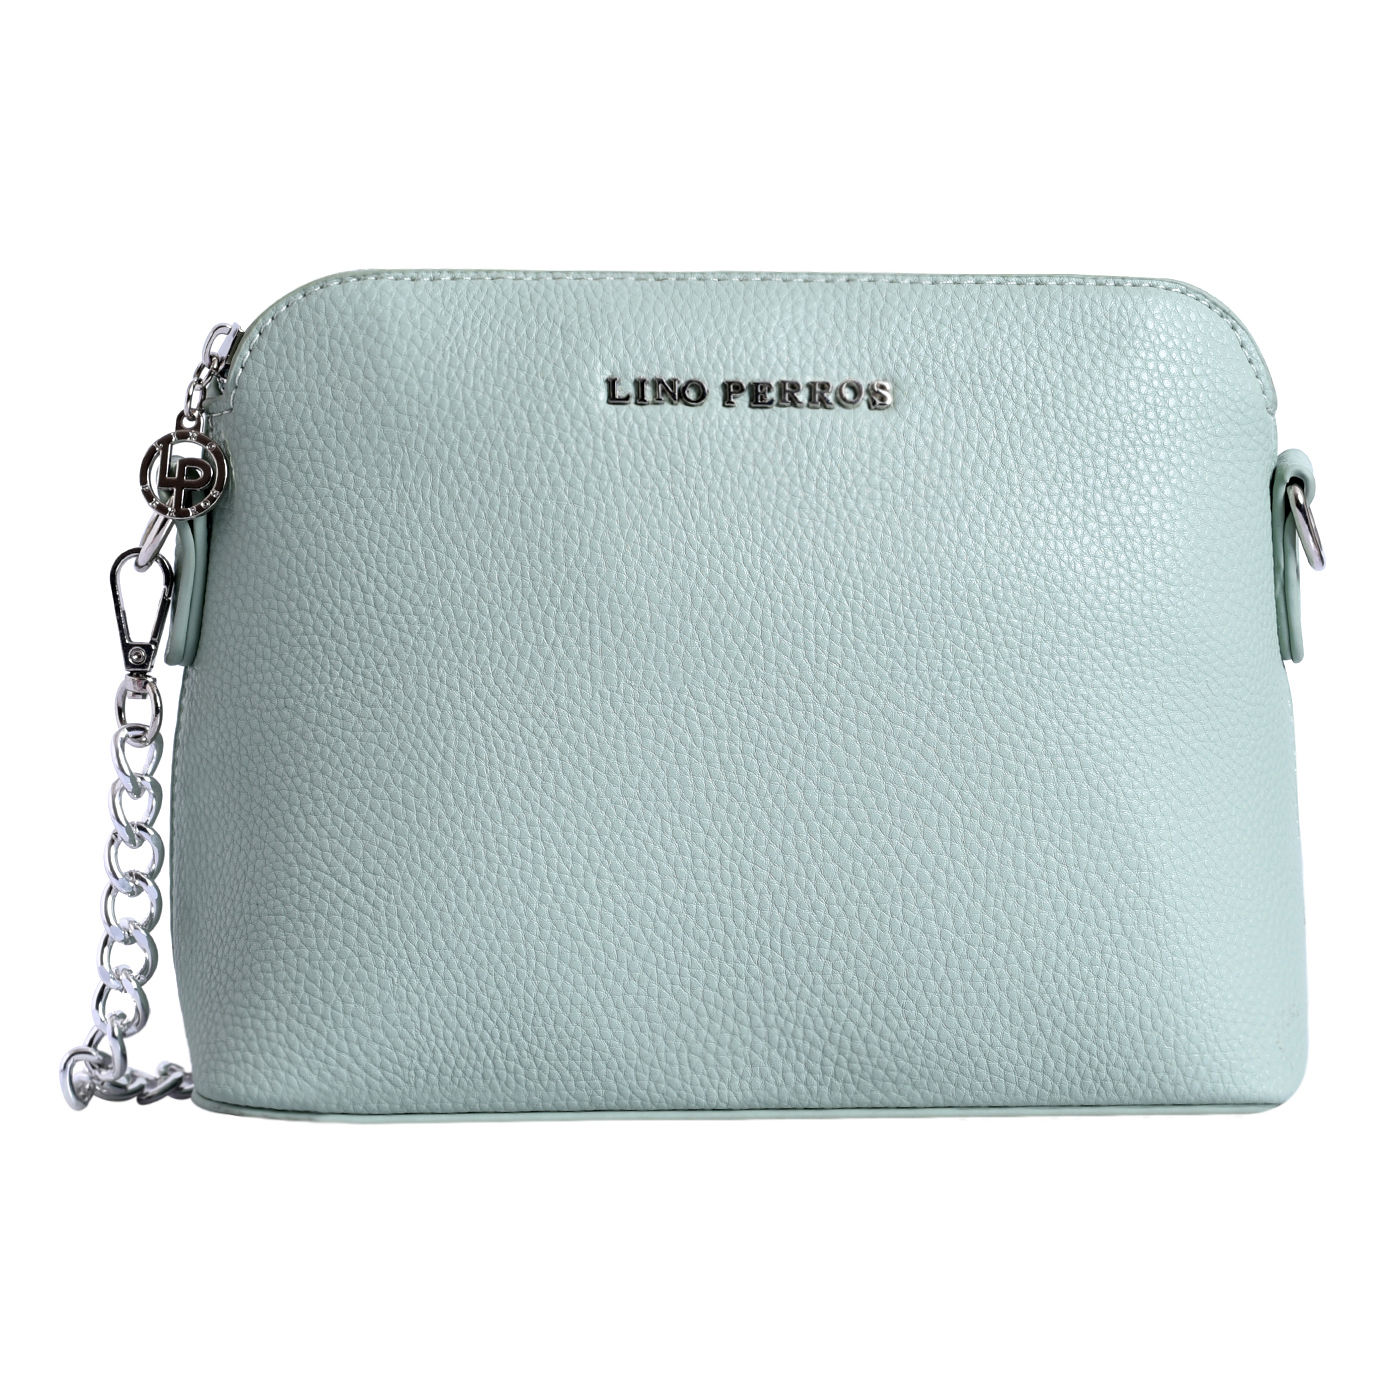 Lino Perros Sling and Cross bags : Buy Lino Perros Womens Green